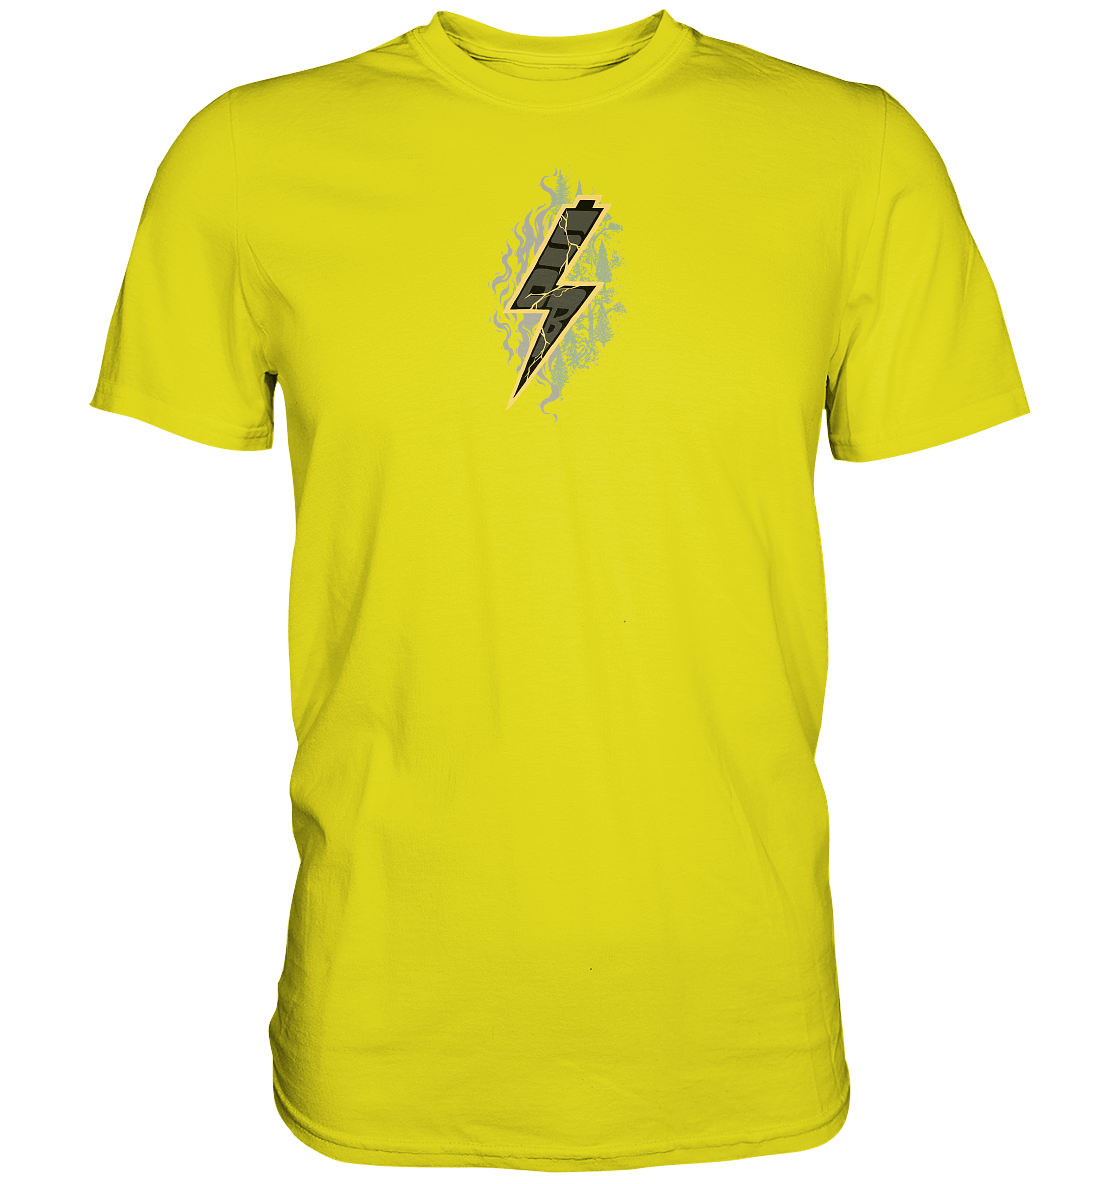 Sons of Battery® - E-MTB Brand & Community Unisex-Shirts Pixel Lime / S SoB - Shred or Alive - Premium Shirt E-Bike-Community